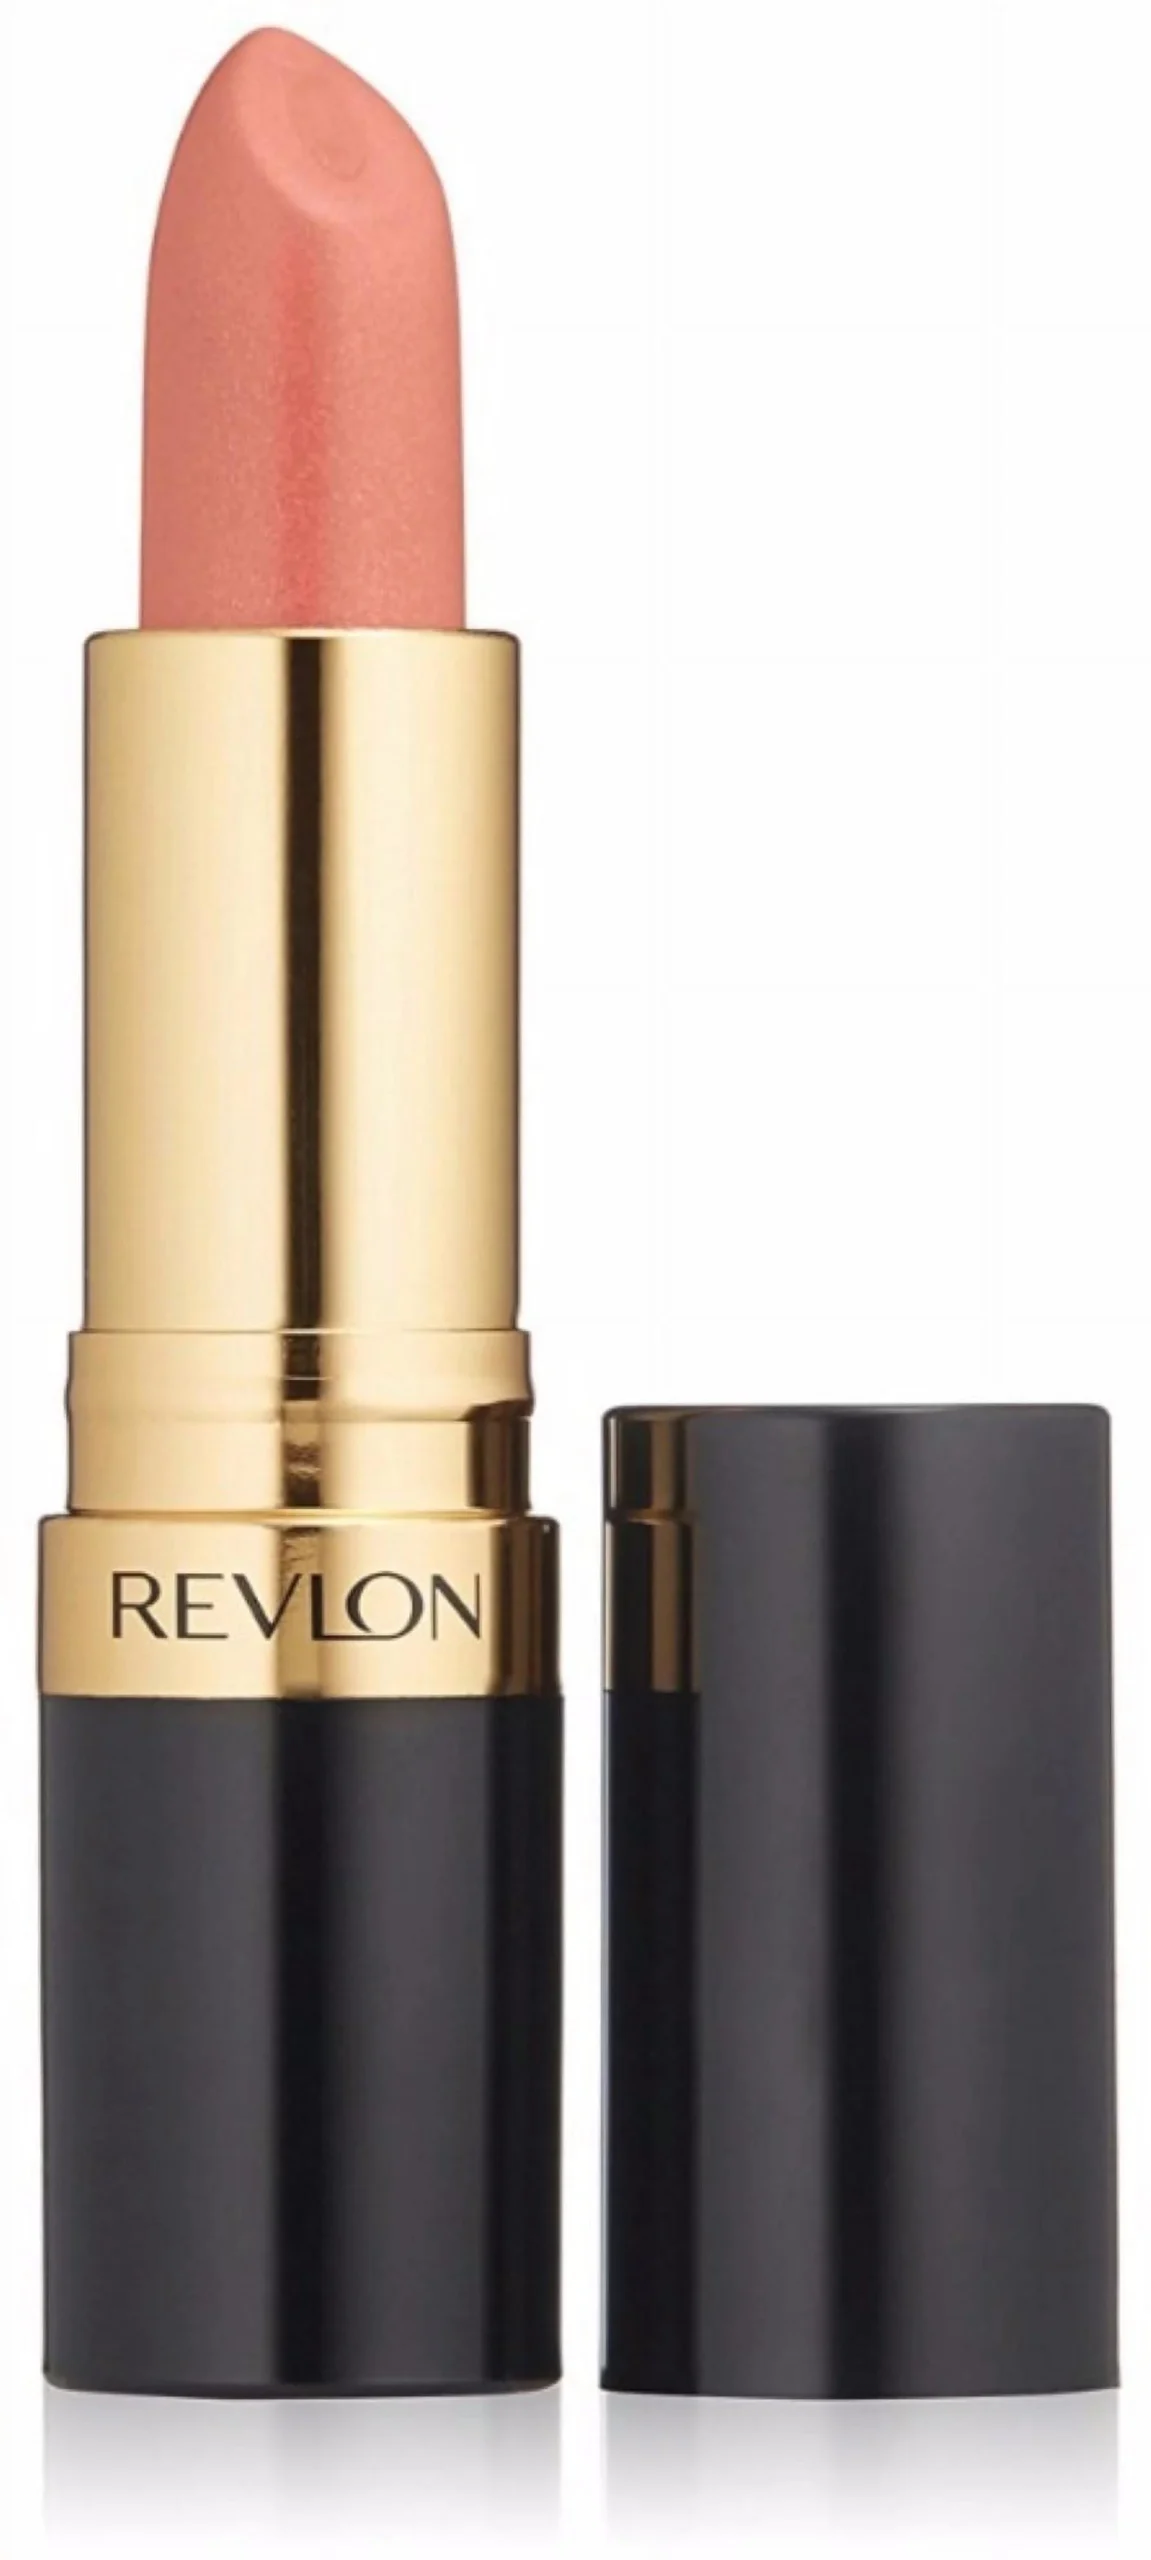 revlon smoked peach - Does Revlon lipstick last